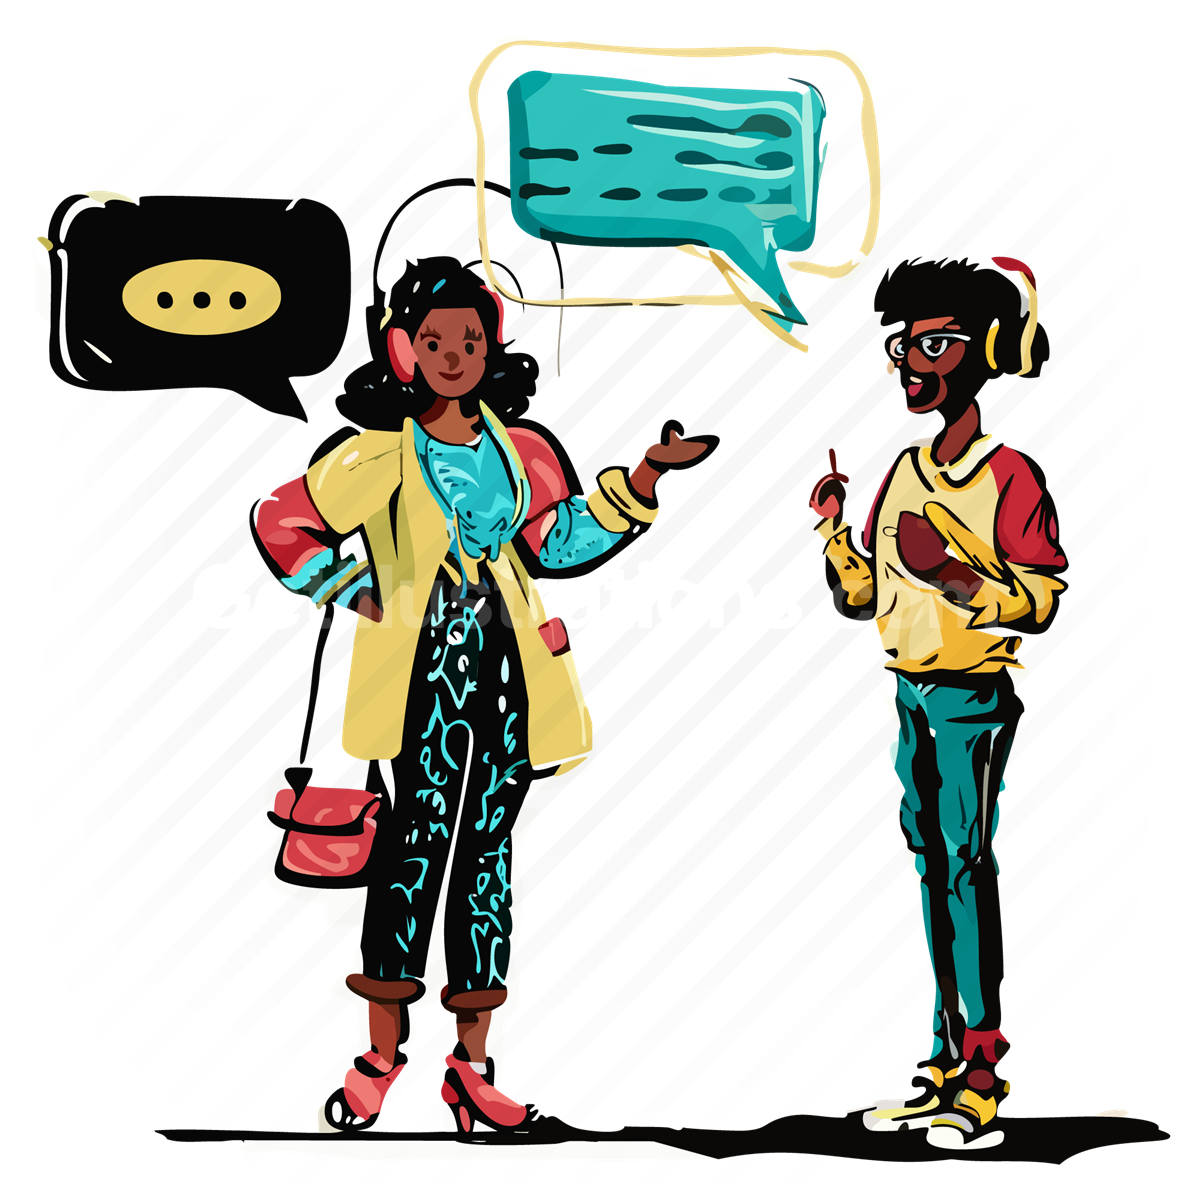 Social Media and Communication  illustration